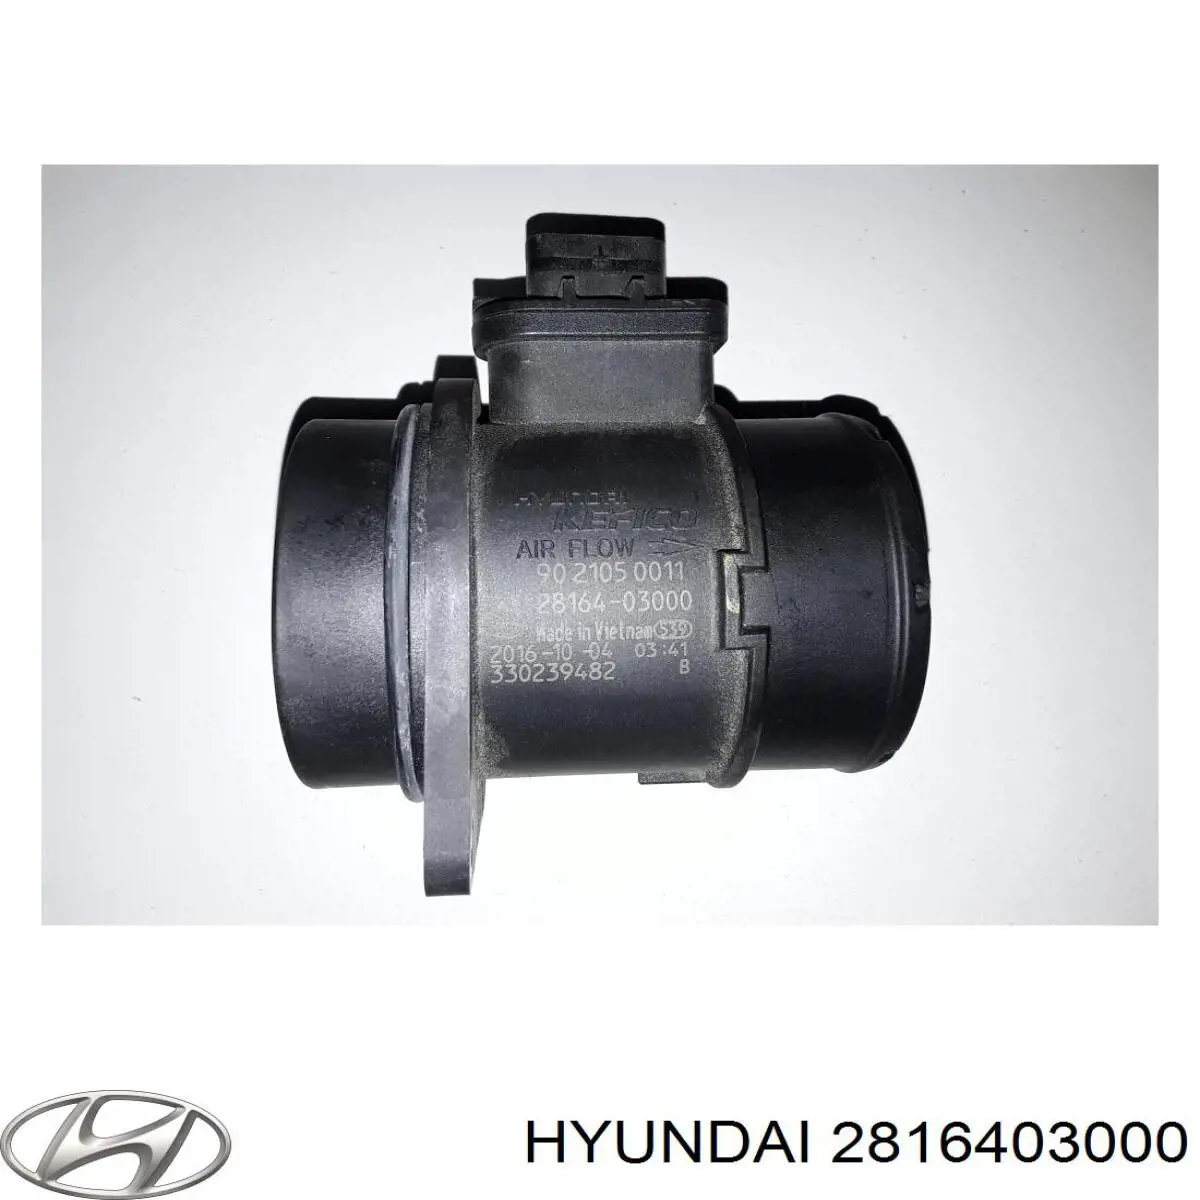 9021050011 Hyundai/Kia sensor de fluxo (consumo de ar, medidor de consumo M.A.F. - (Mass Airflow))